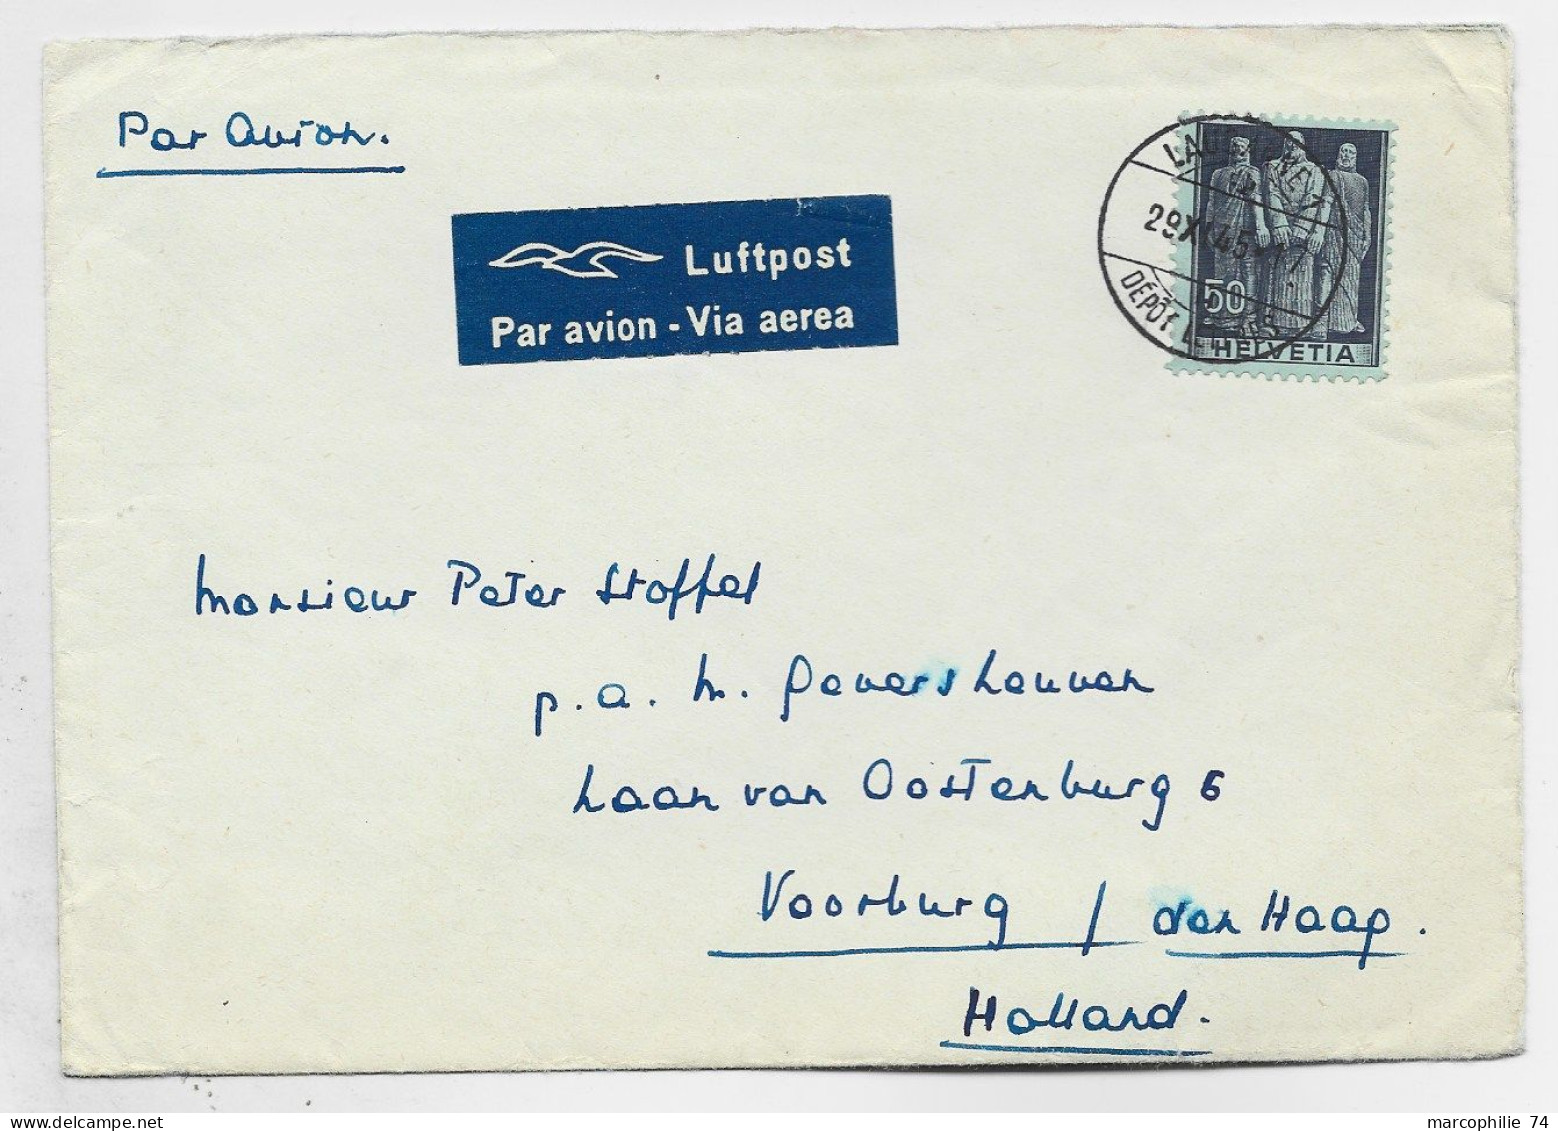 HELVETIA SUISSE 50C SEUL LETTRE COVER AVION LAUSANNE 29.XI.1945 DEPOT LETTRES TO HOLLAND - Covers & Documents